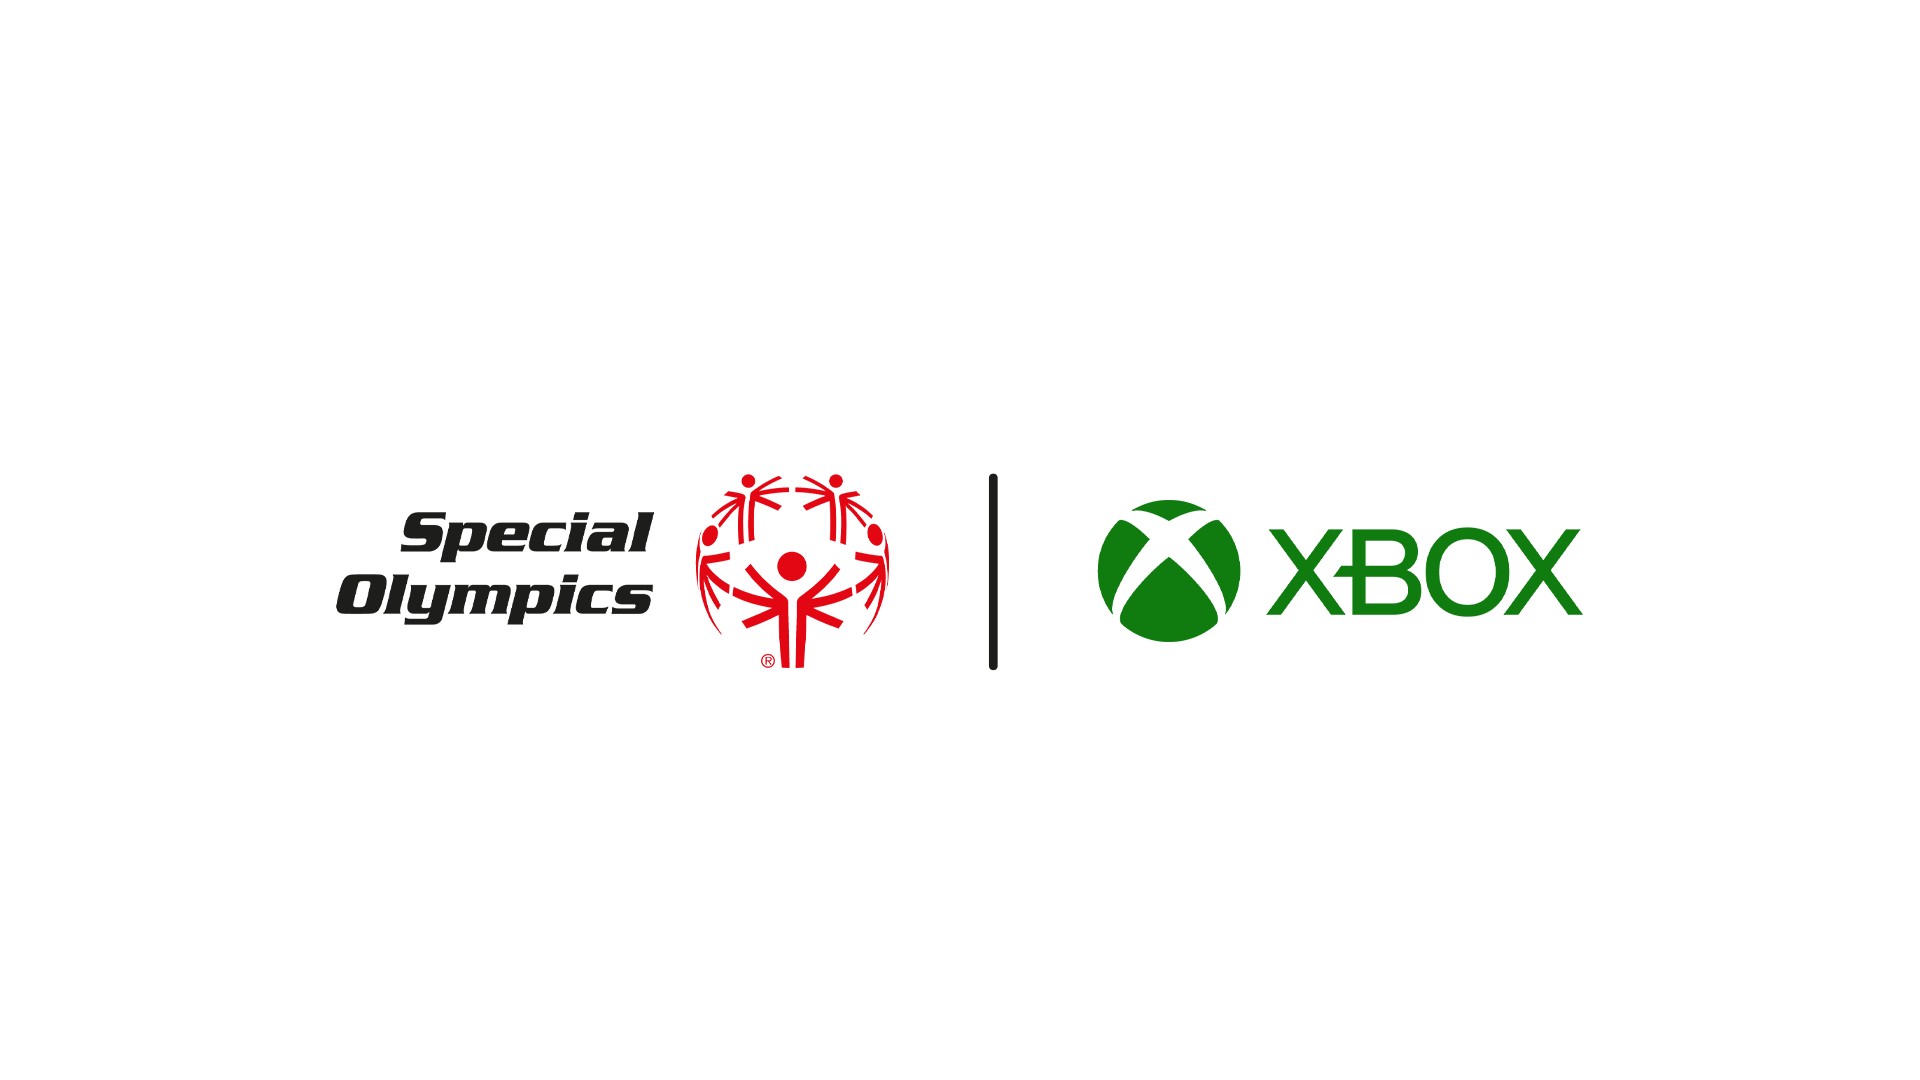 Xbox ist Teil der Special Olympics World Games Berlin 2023